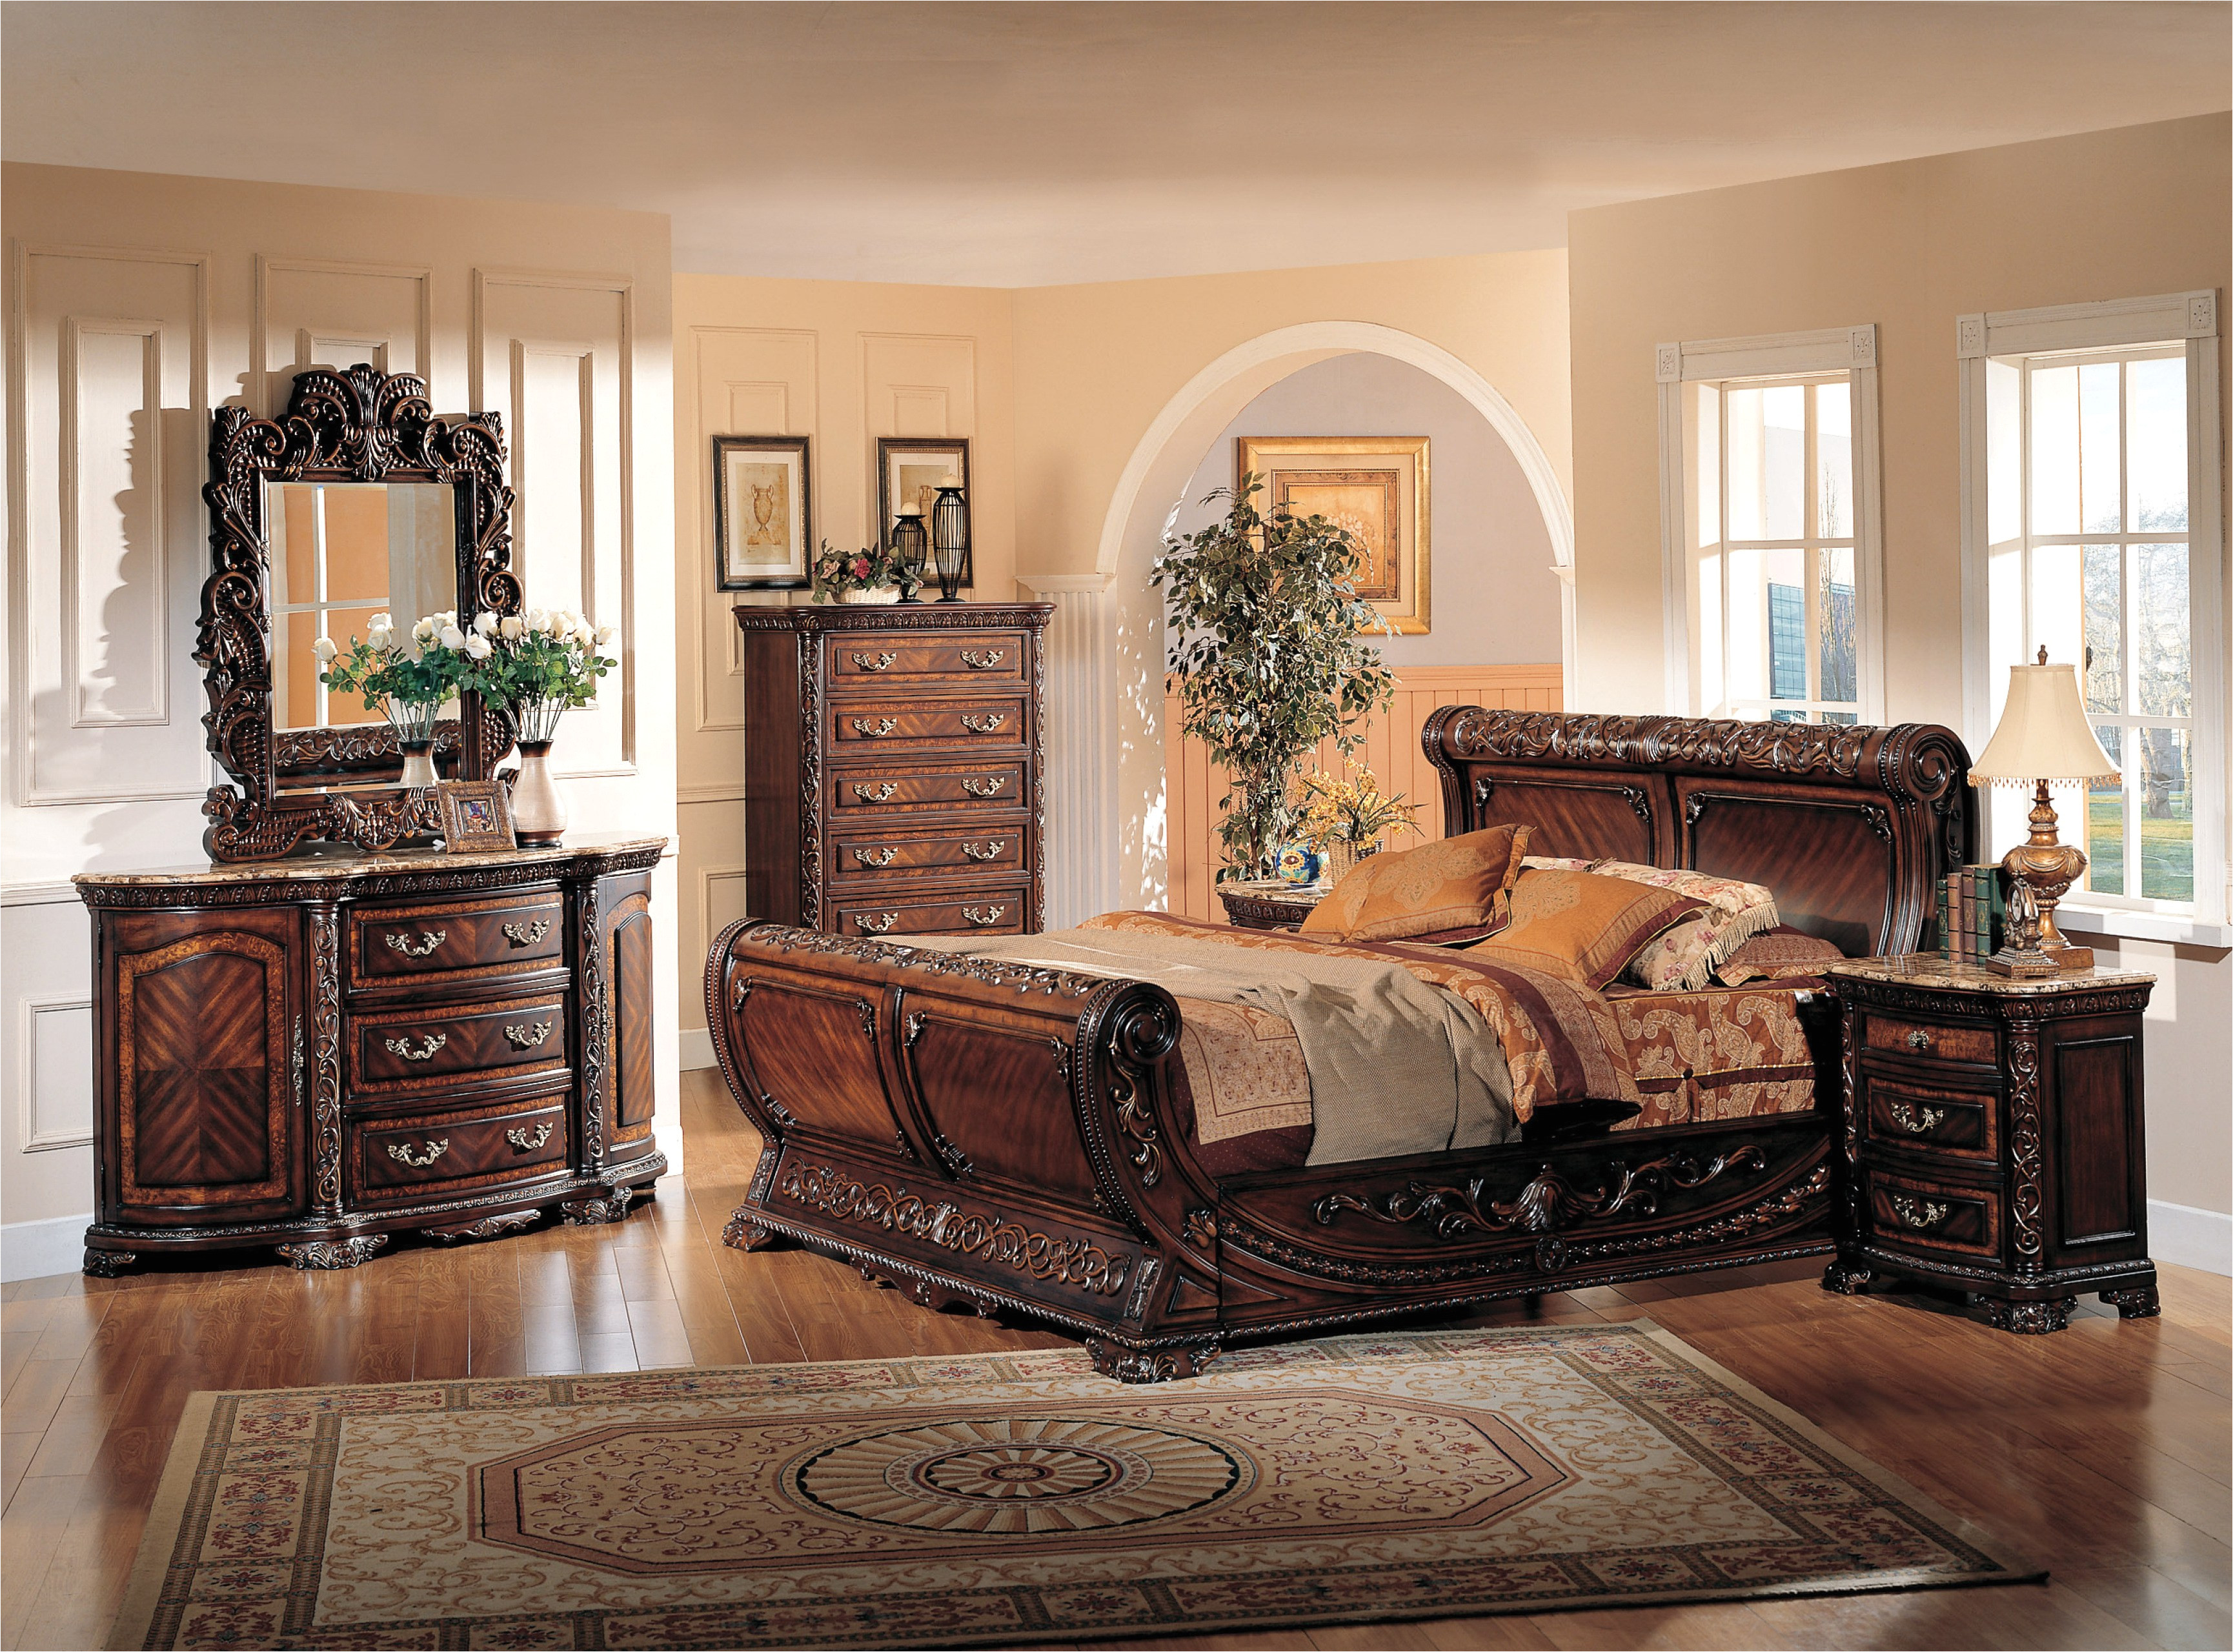 kimbrell's bedroom furniture